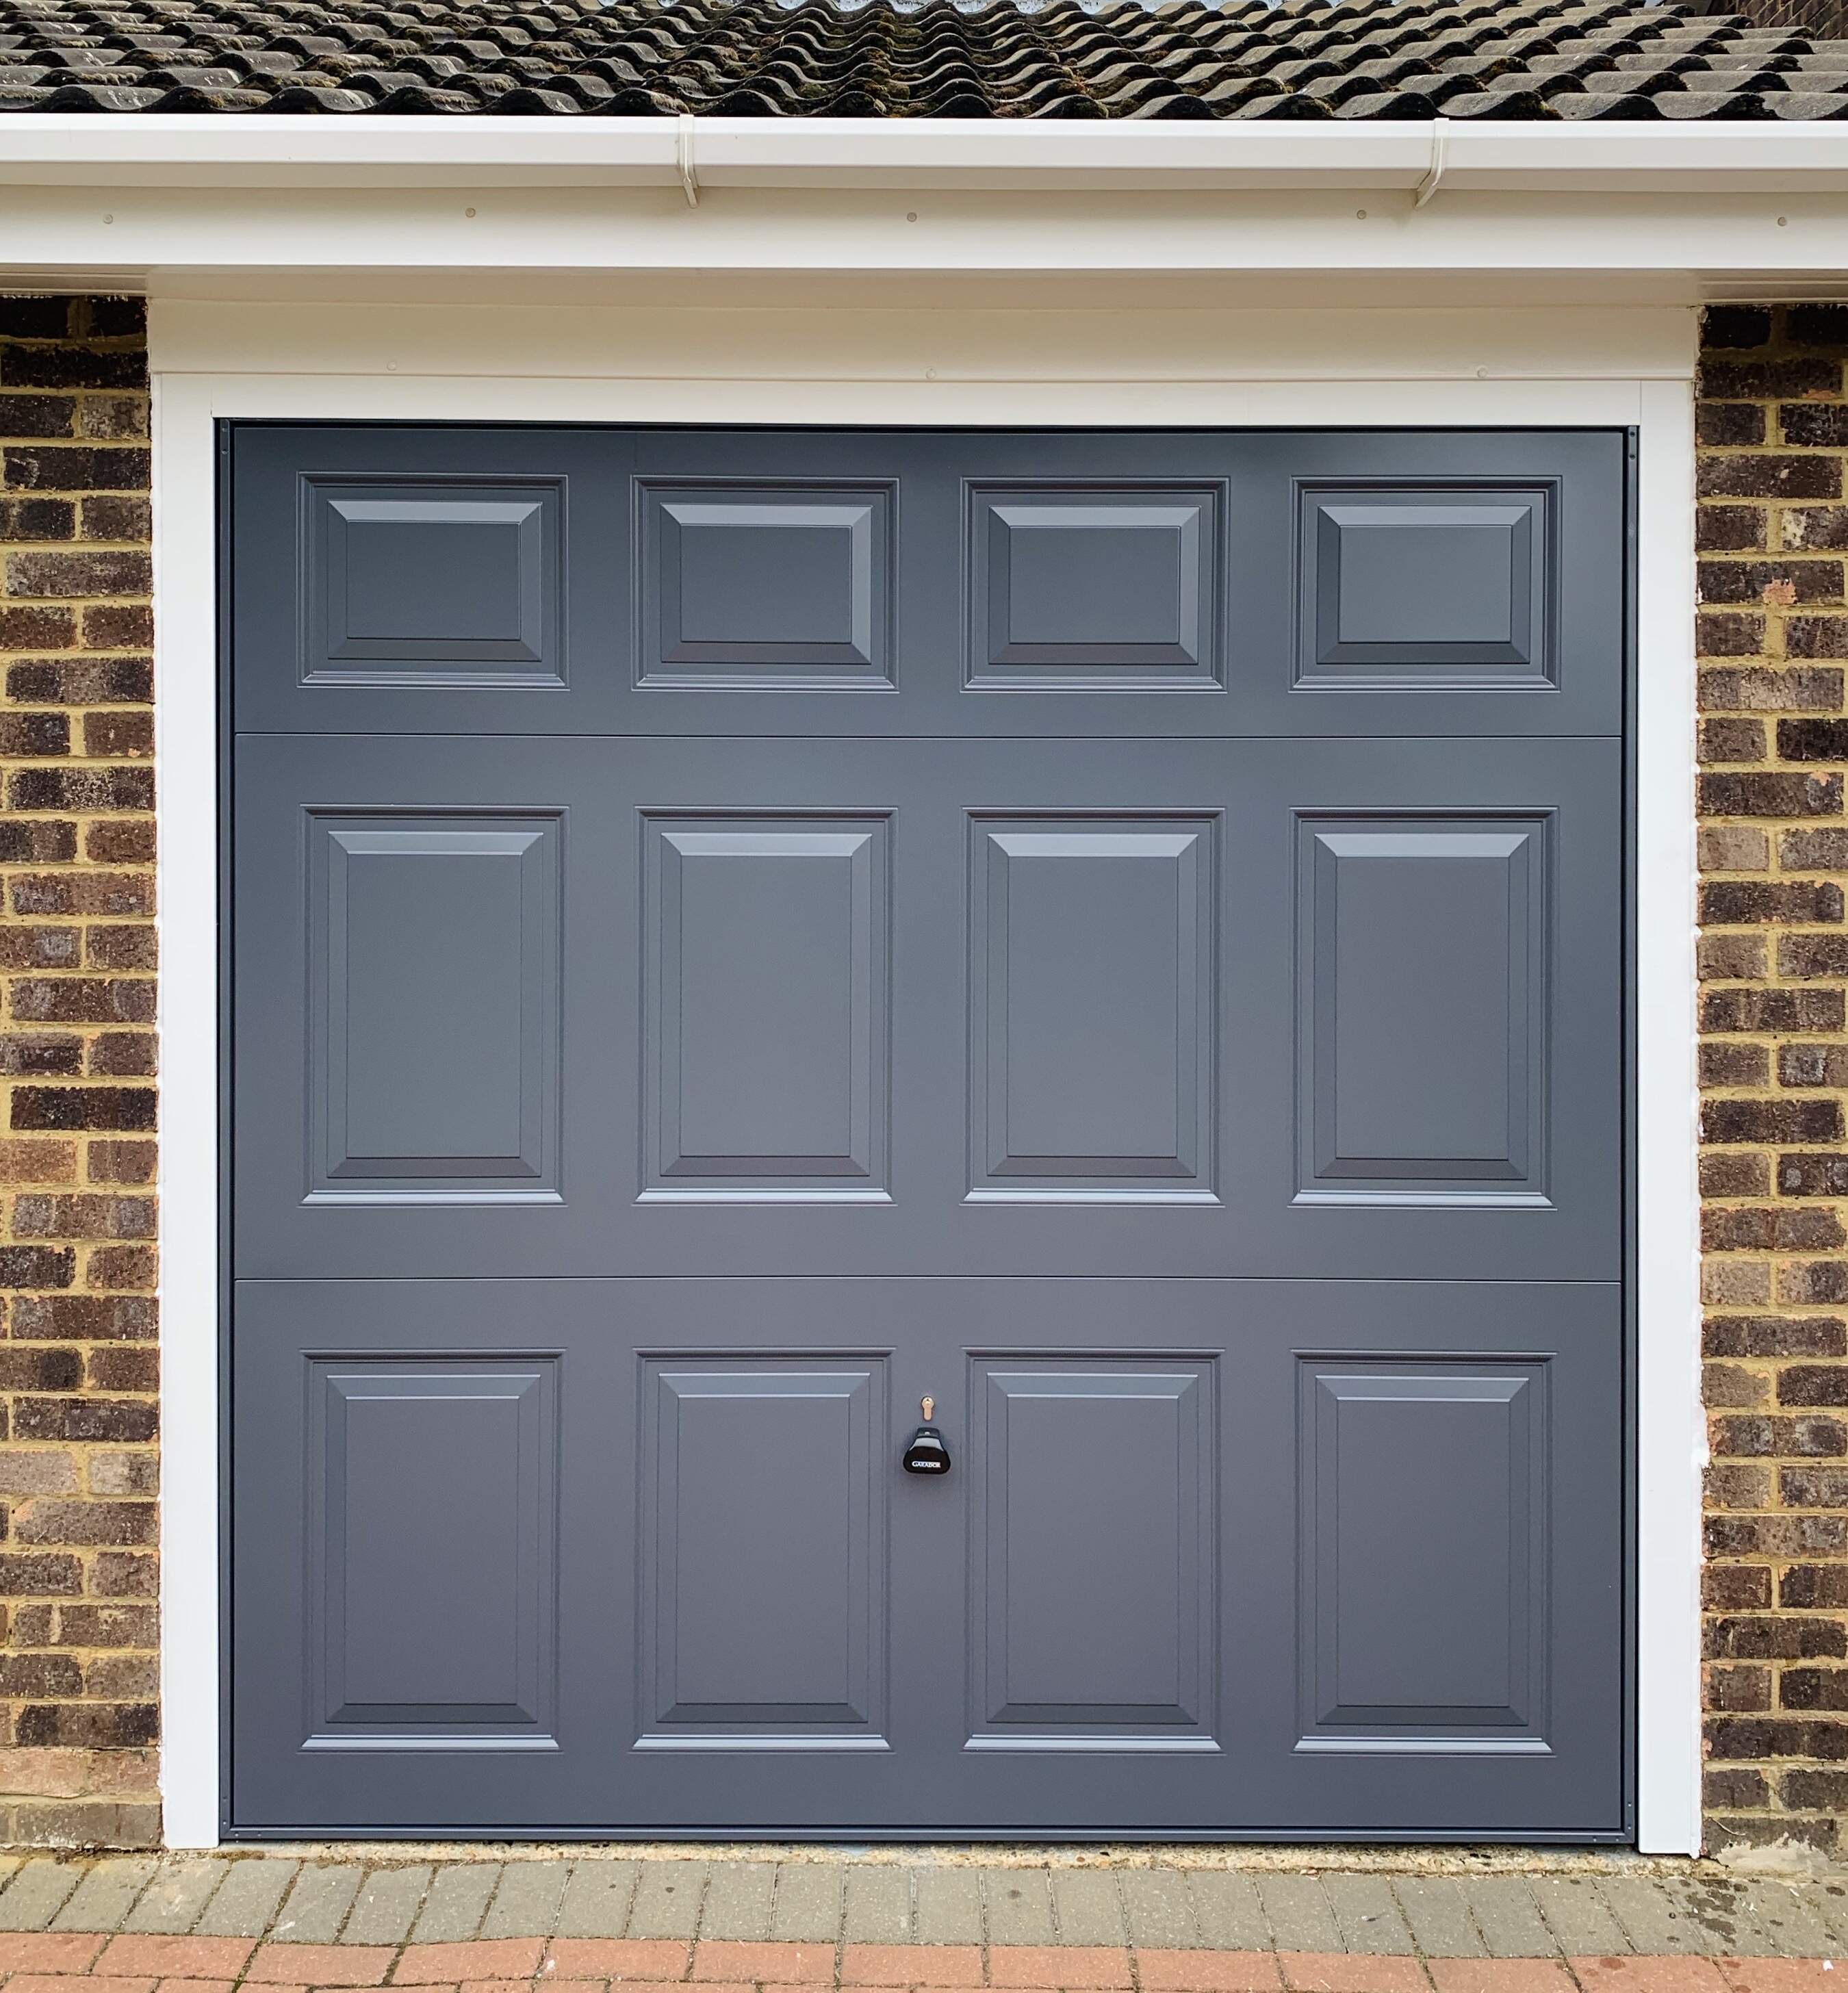 Single Steel (Slate Grey) Beaumont Retractable Garage Door with White Frame.